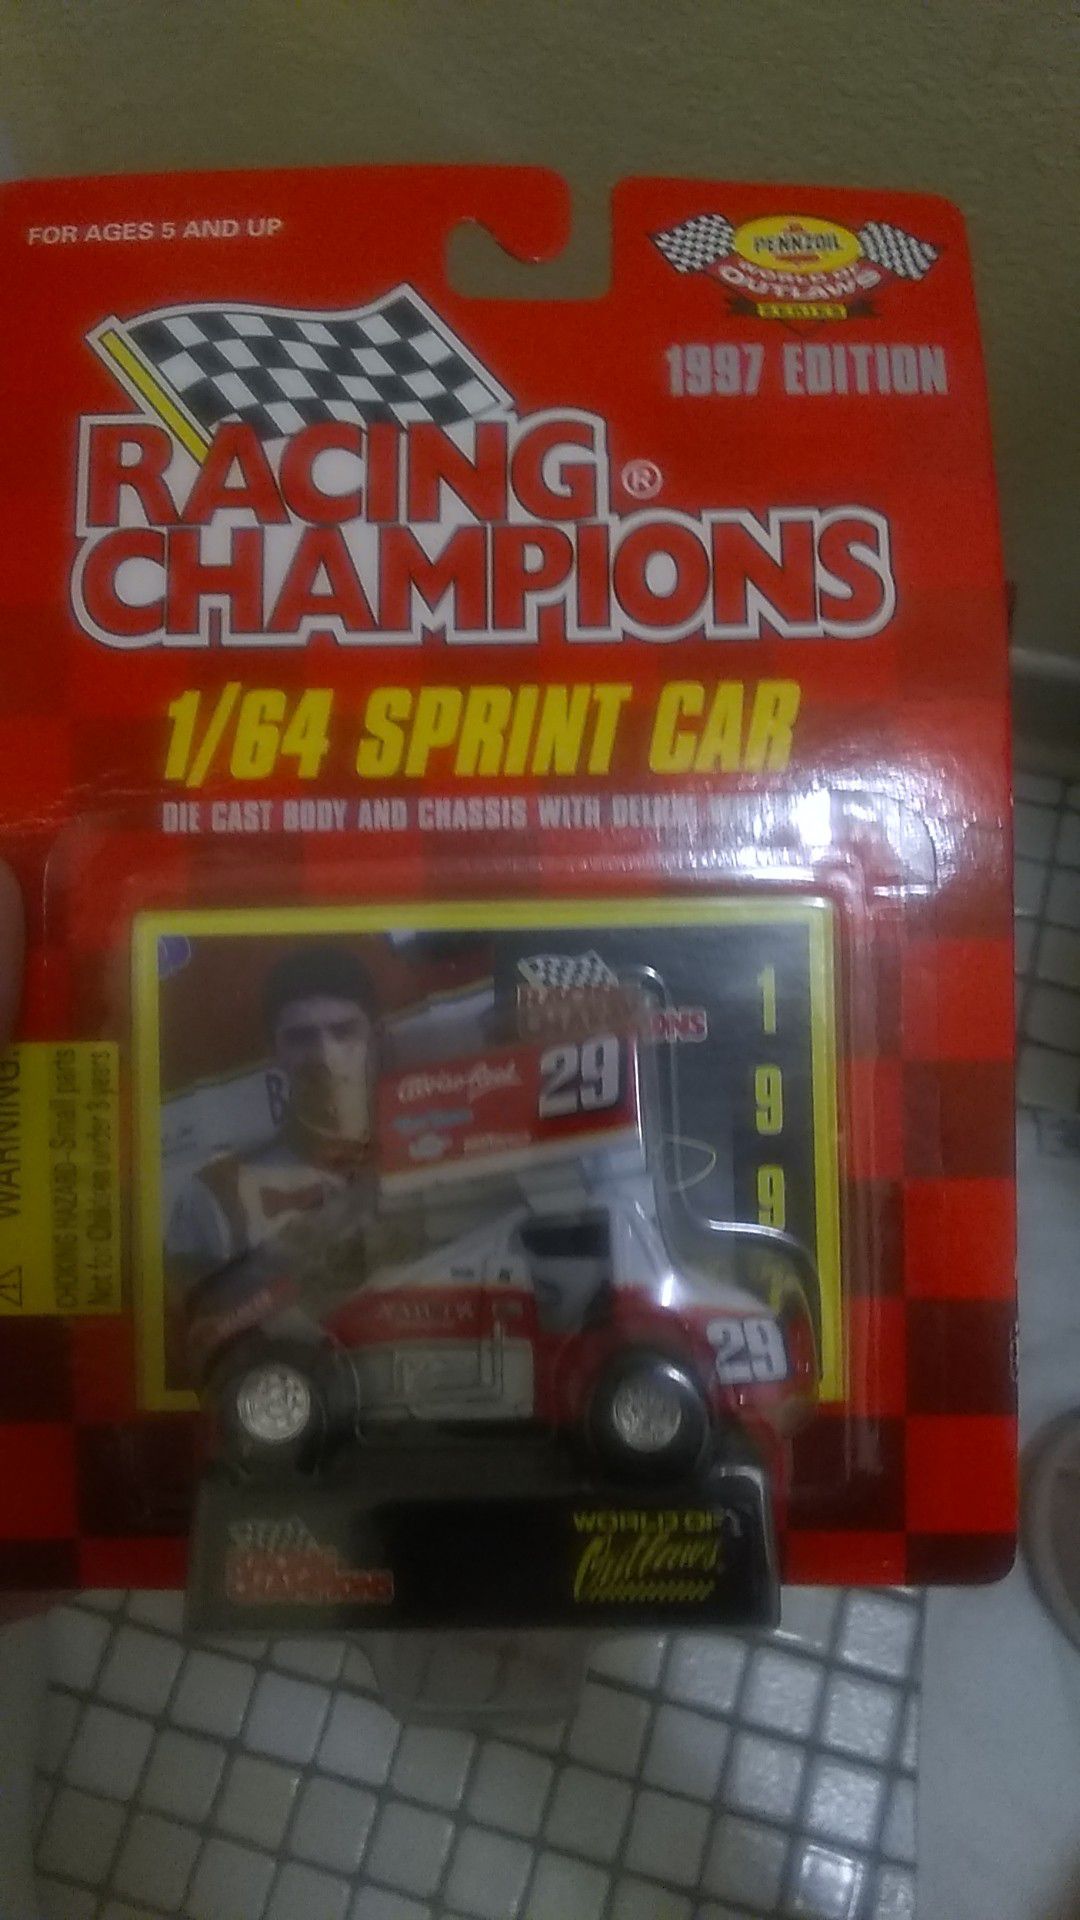 1997 Racing Champion #29 Bud Kaeding 1/64 Sprint car